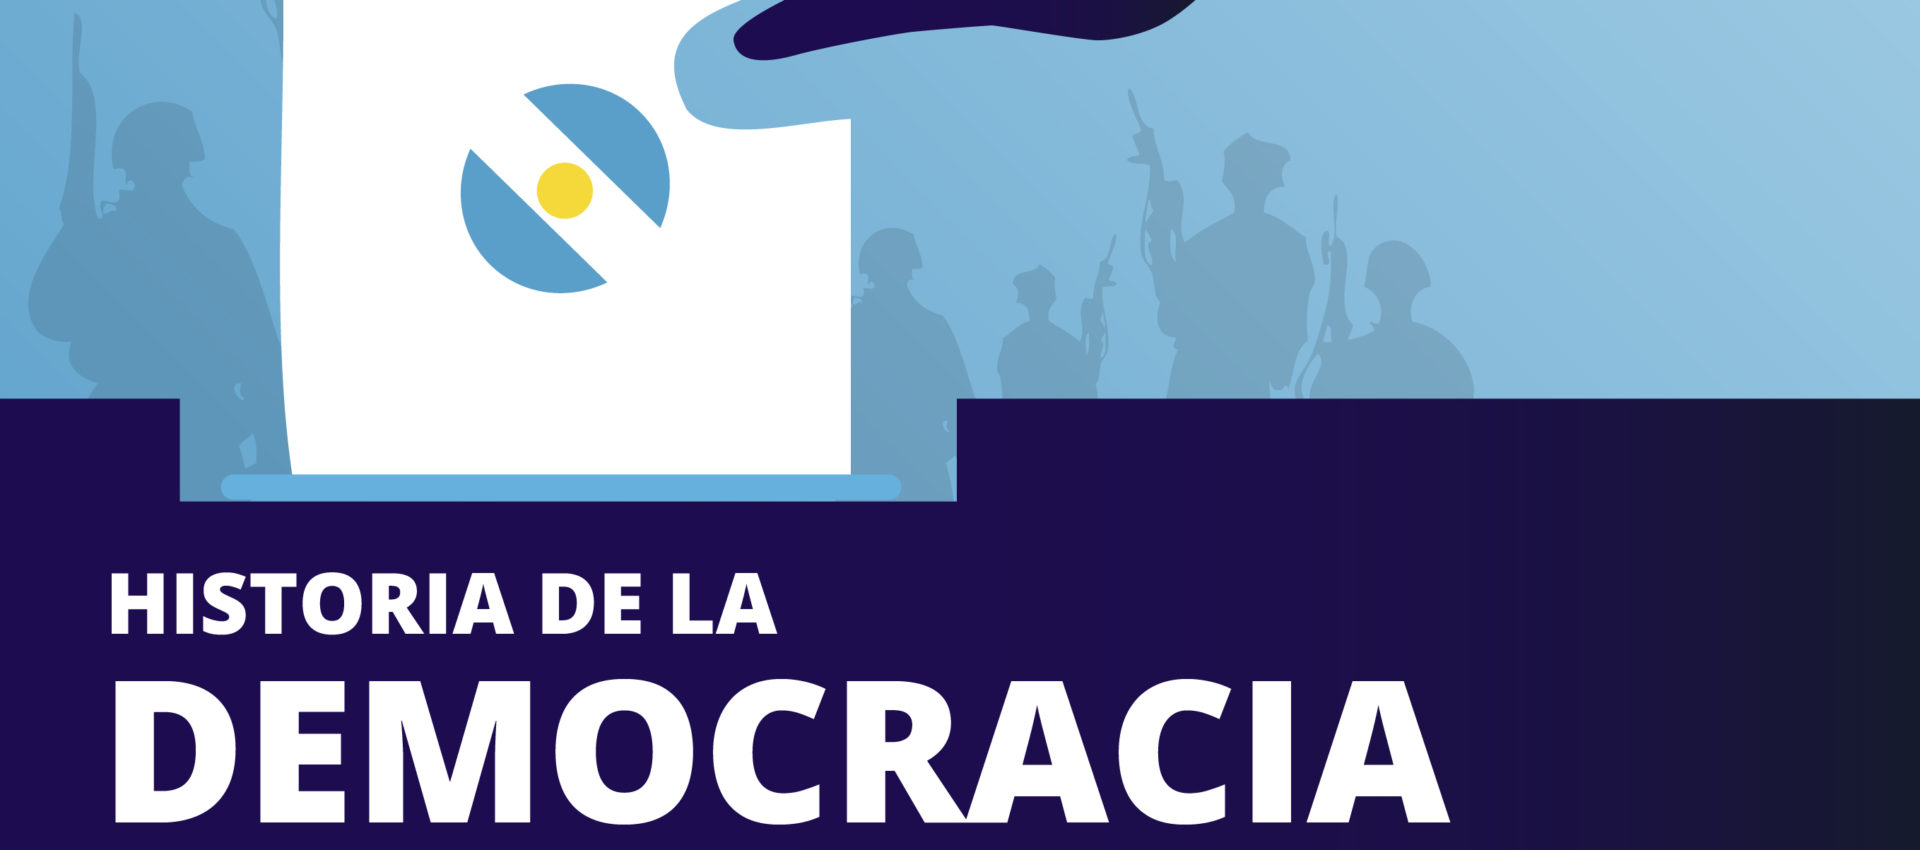 Democracia Argentina